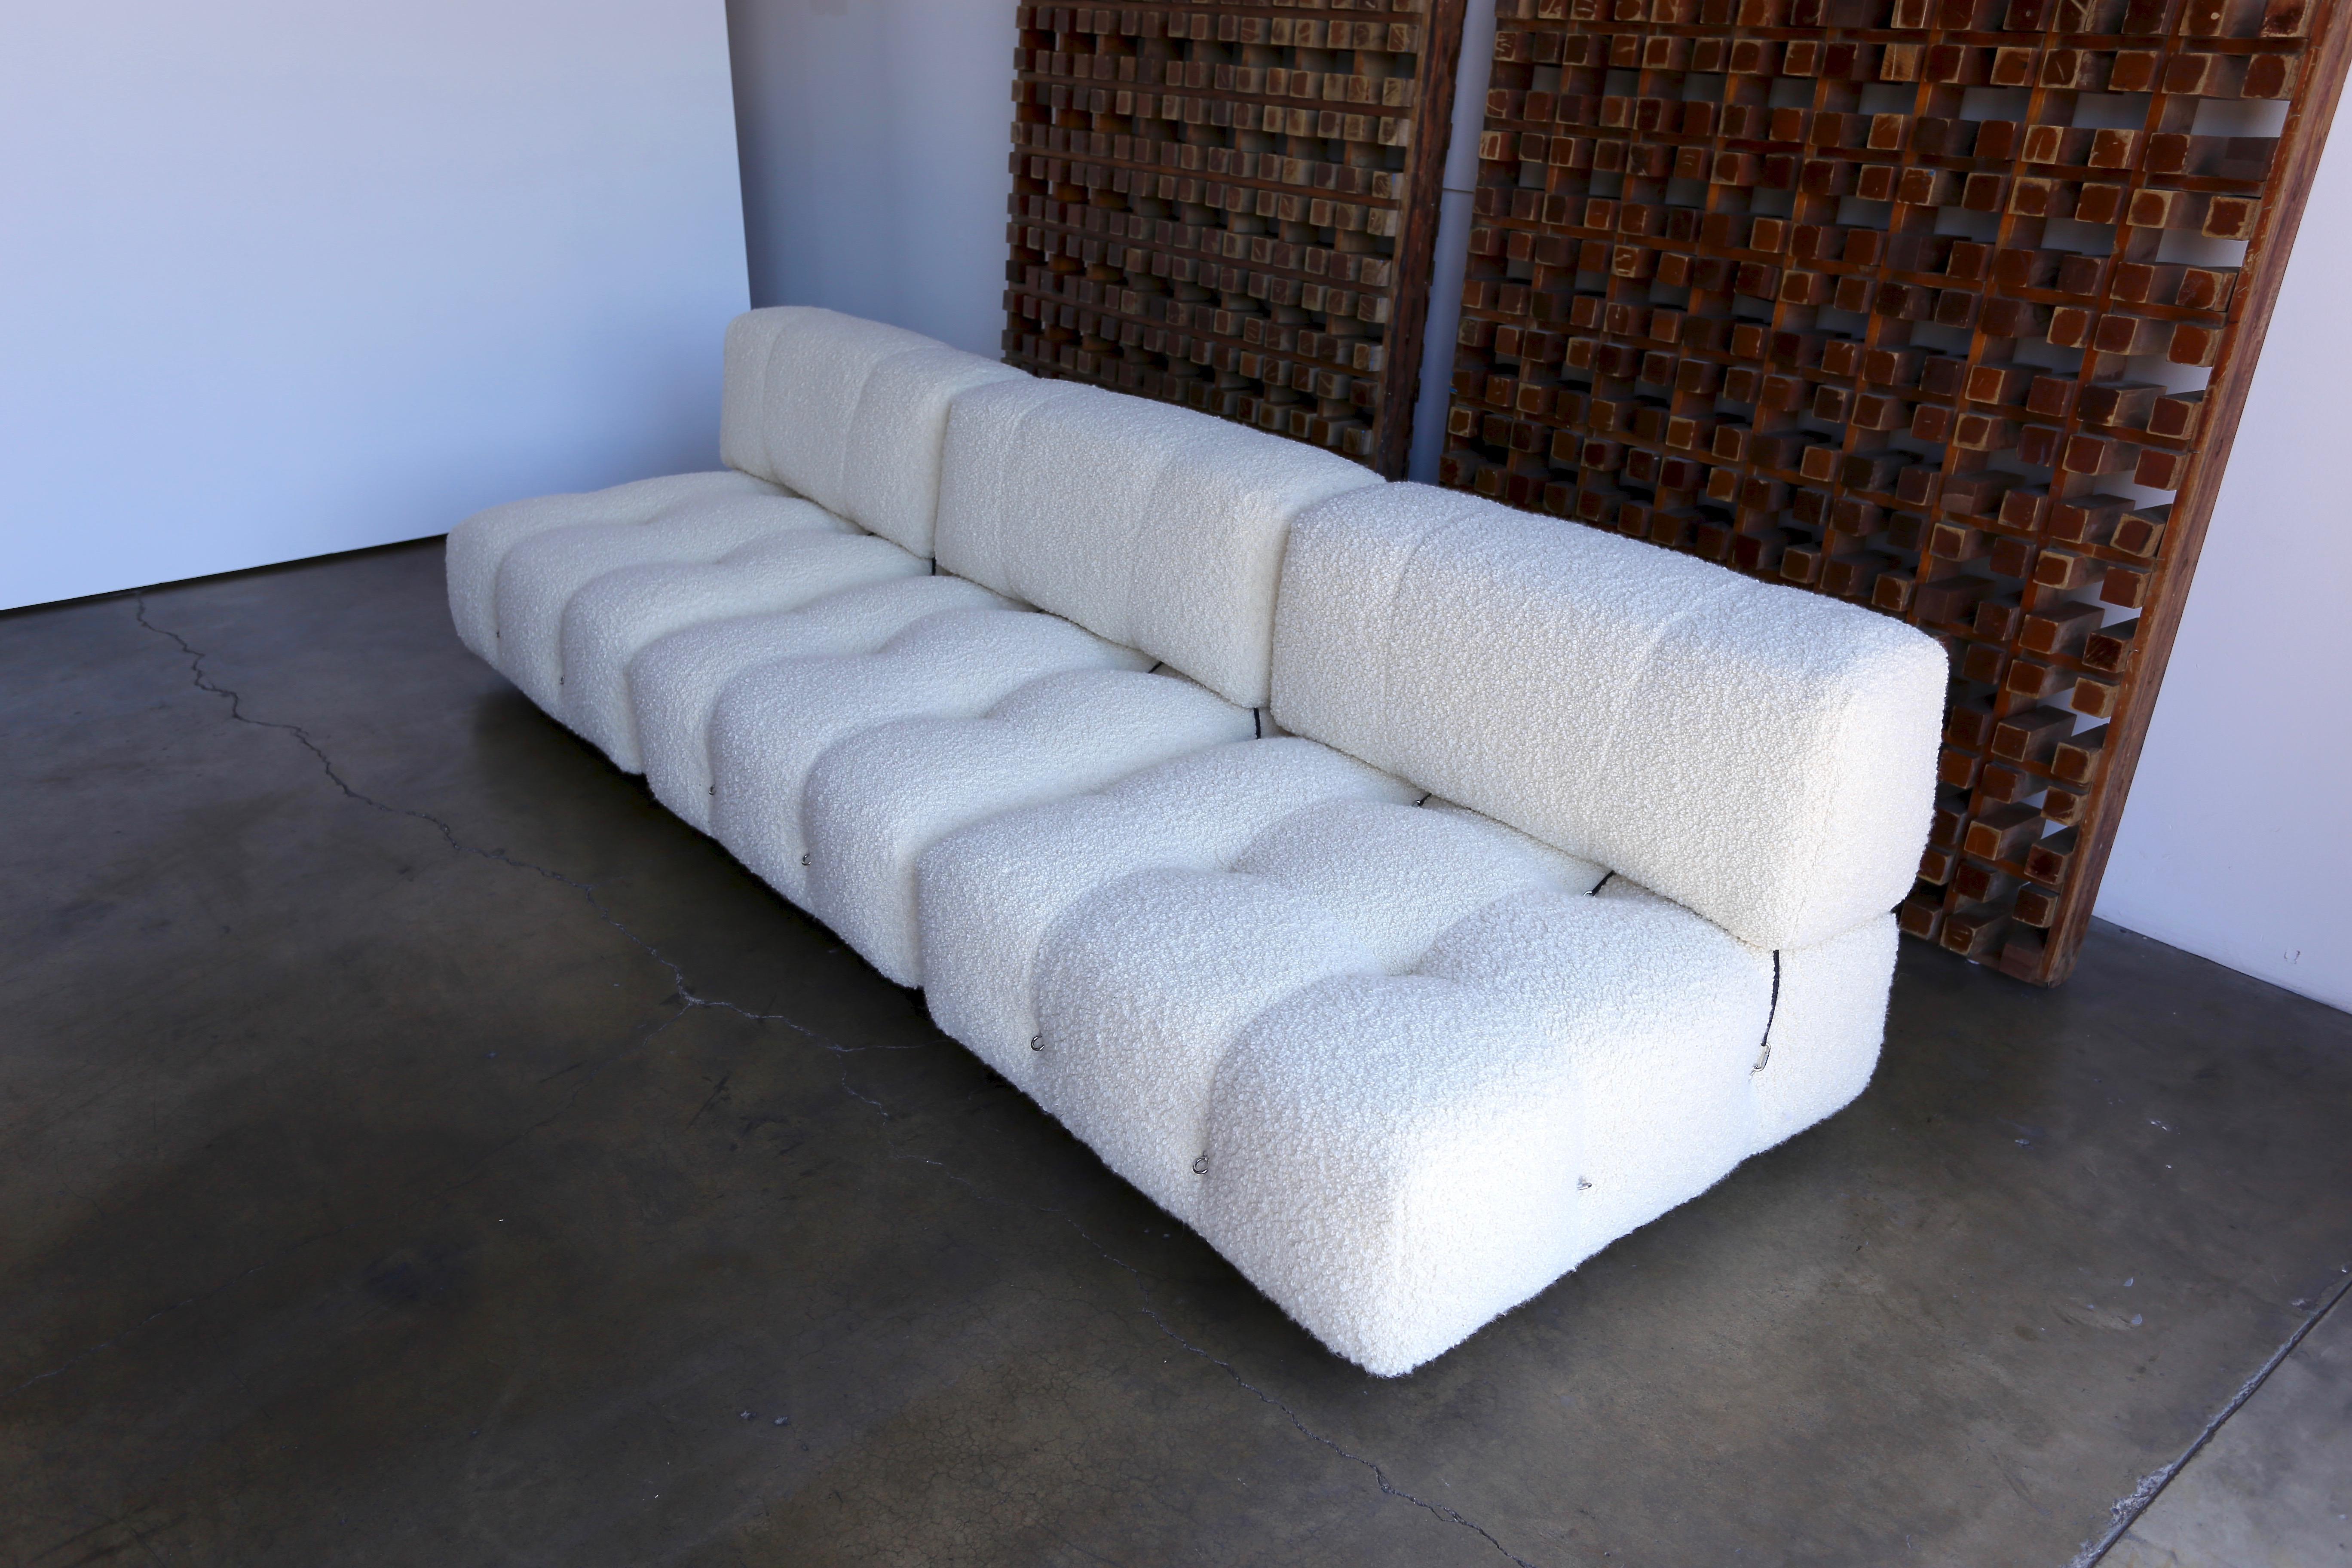 Mario Bellini 'Camaleonda' modular sofa. This piece has been upholstered in beautiful alpaca wool bouclé. 

As pictured this piece measures 113.5